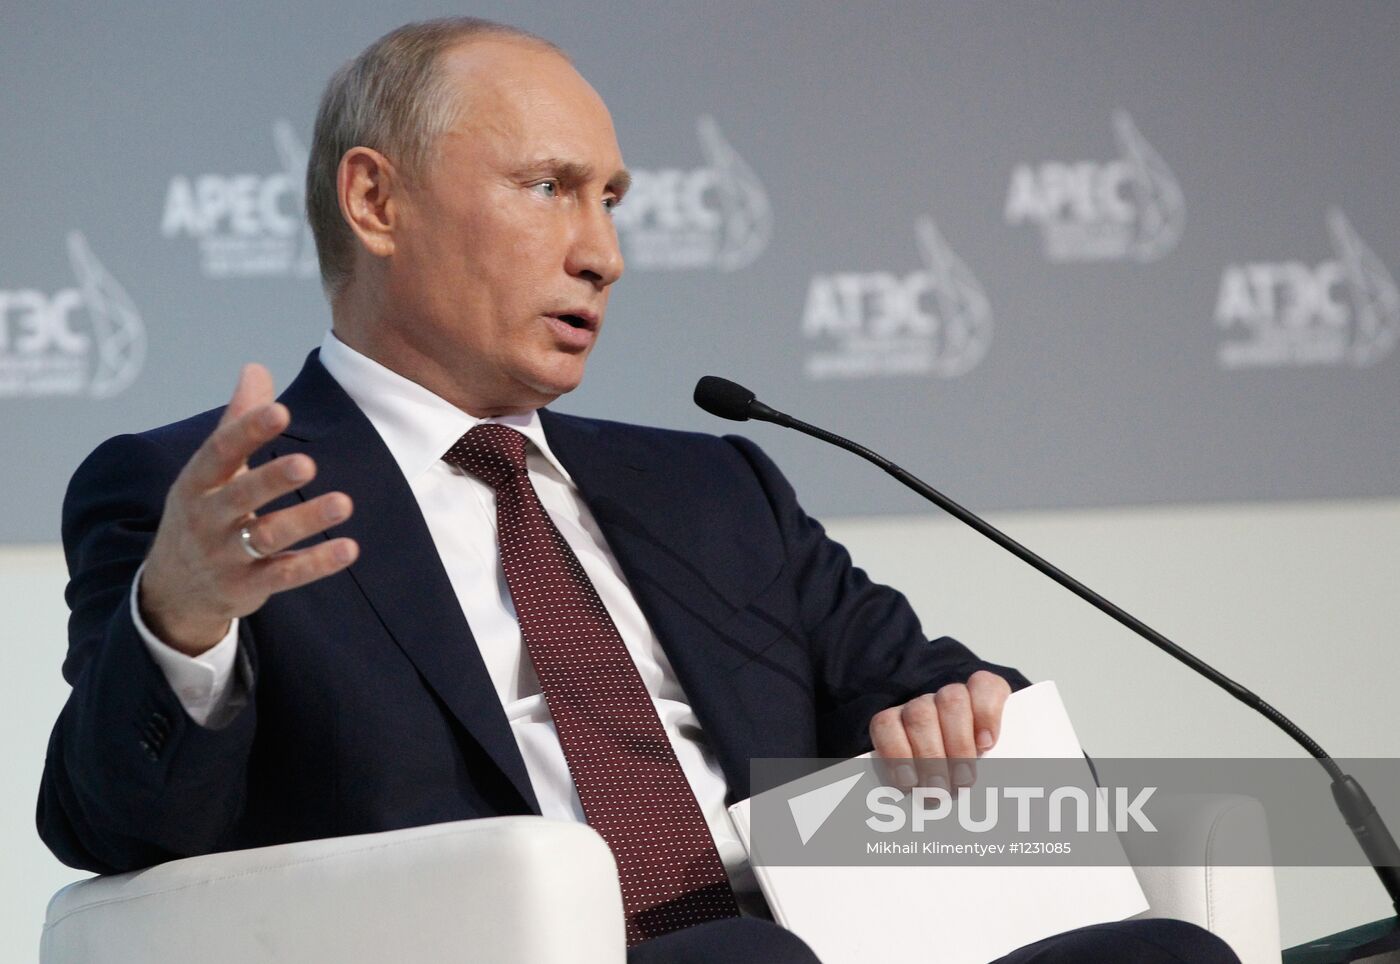 Vladimir Putin opens plenary session of APEC CEO Summit